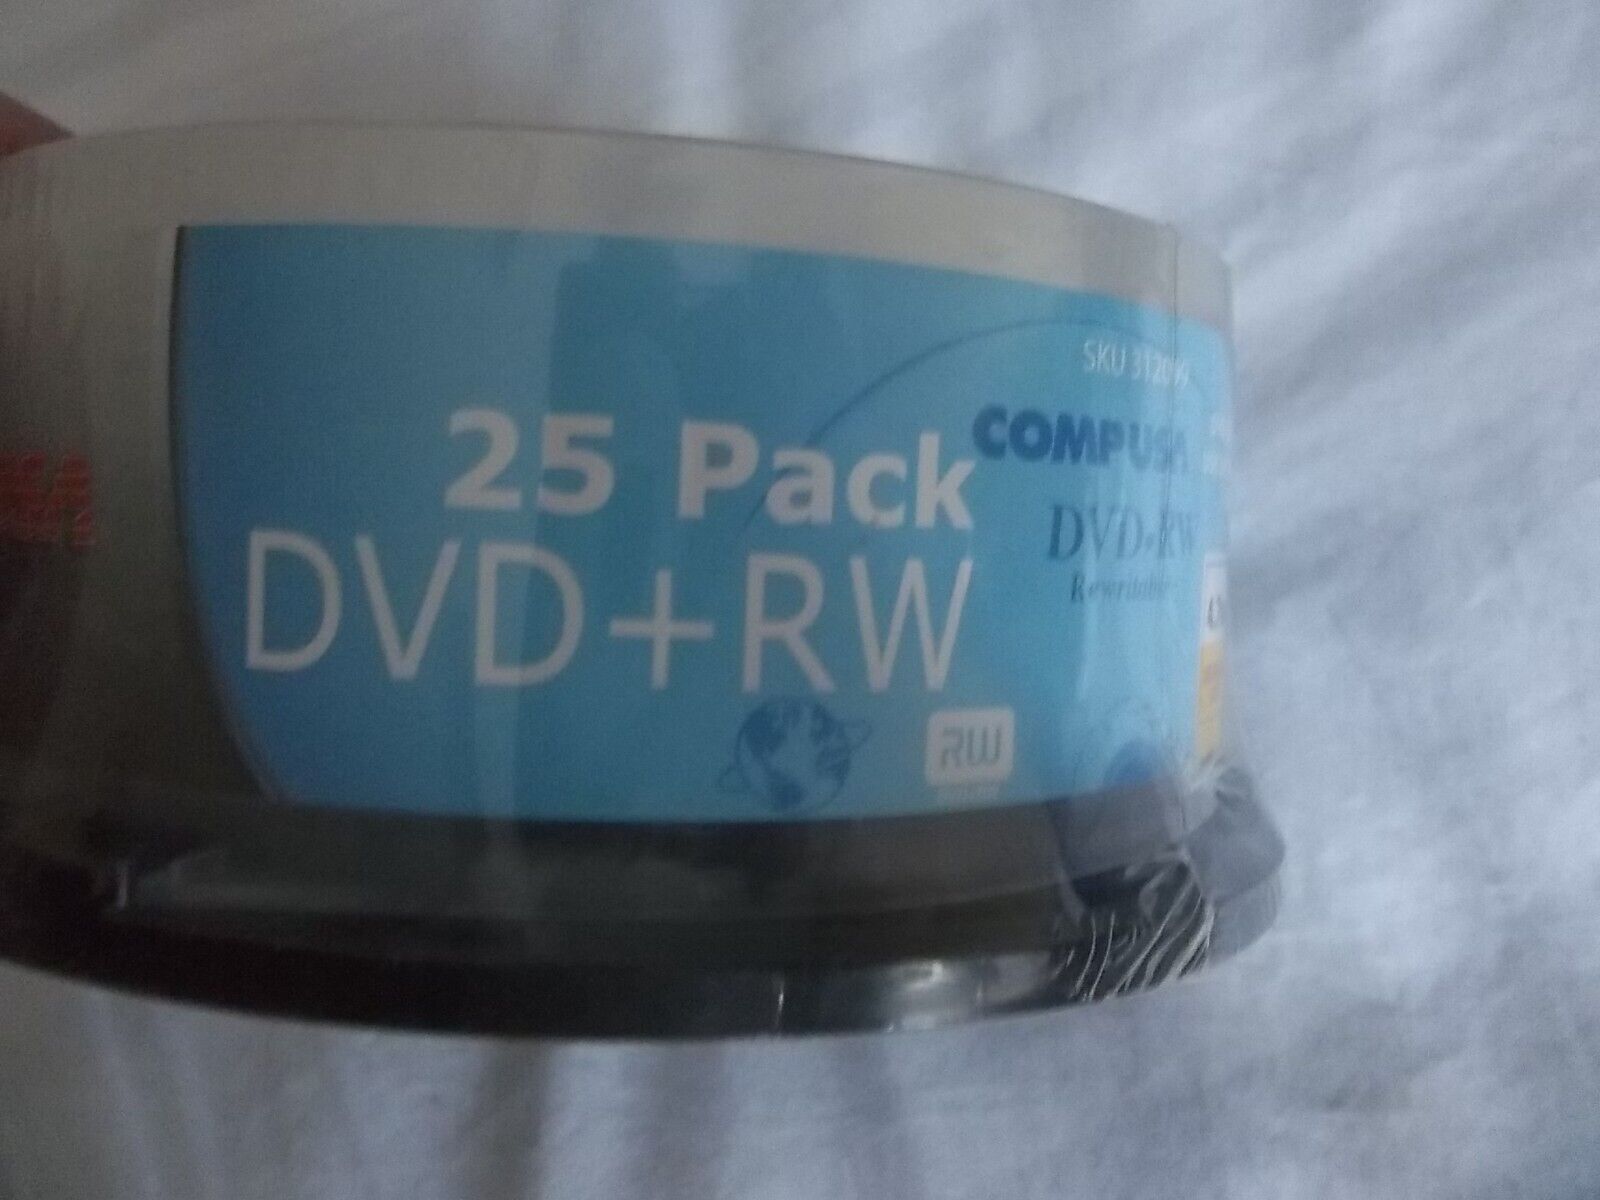 CompUSA 25 Pack DVD+RW 4.7GB 4X speed